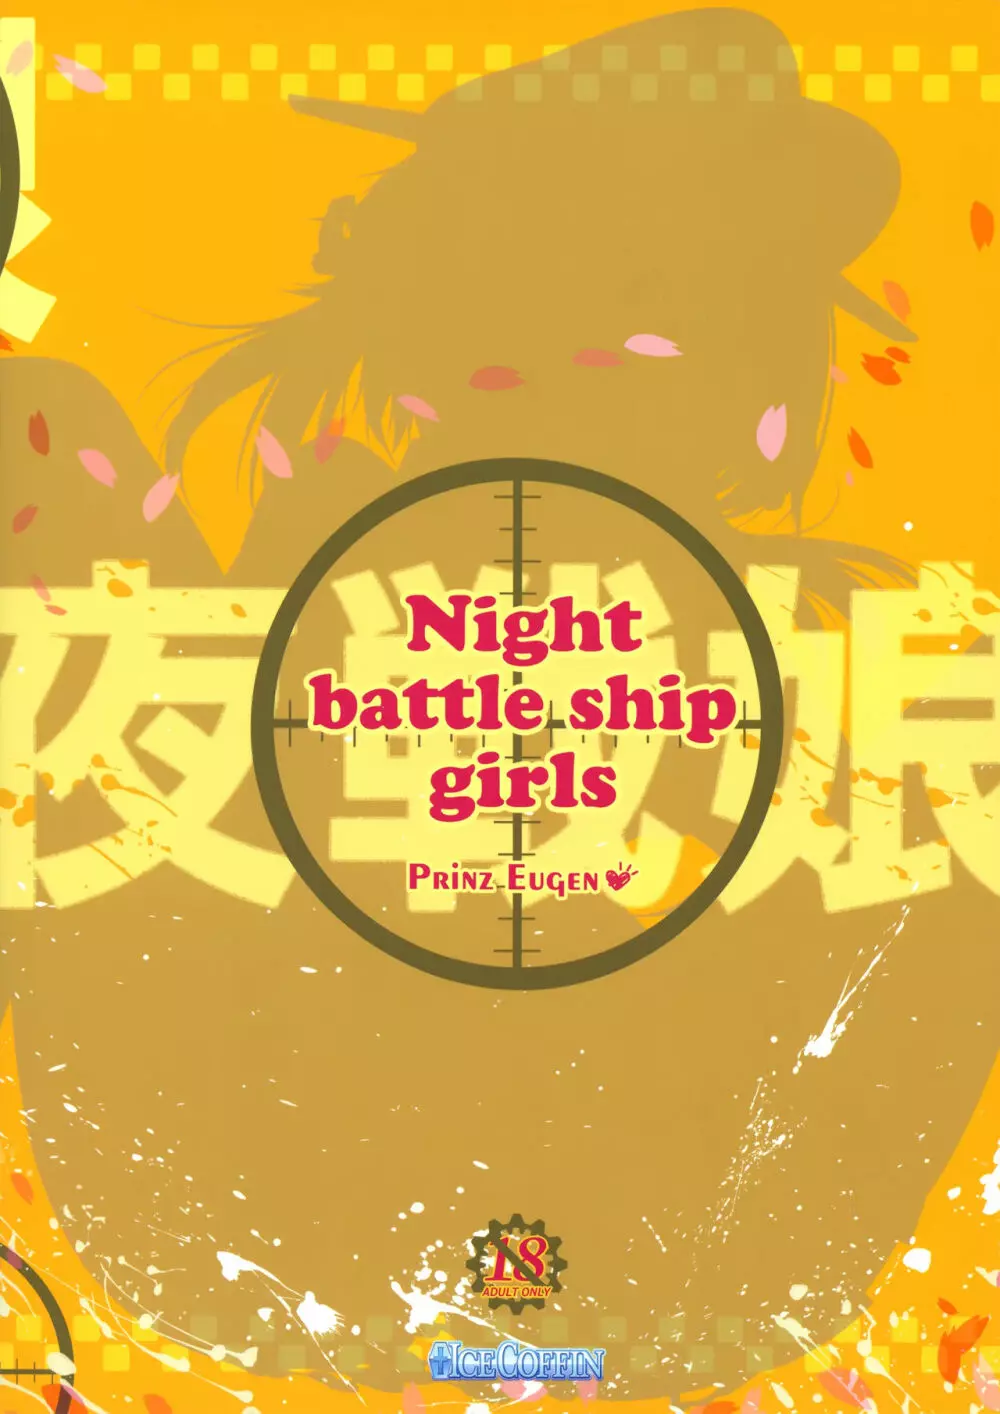 Night battle ship girls -PRiNZ EUGEN- - page26